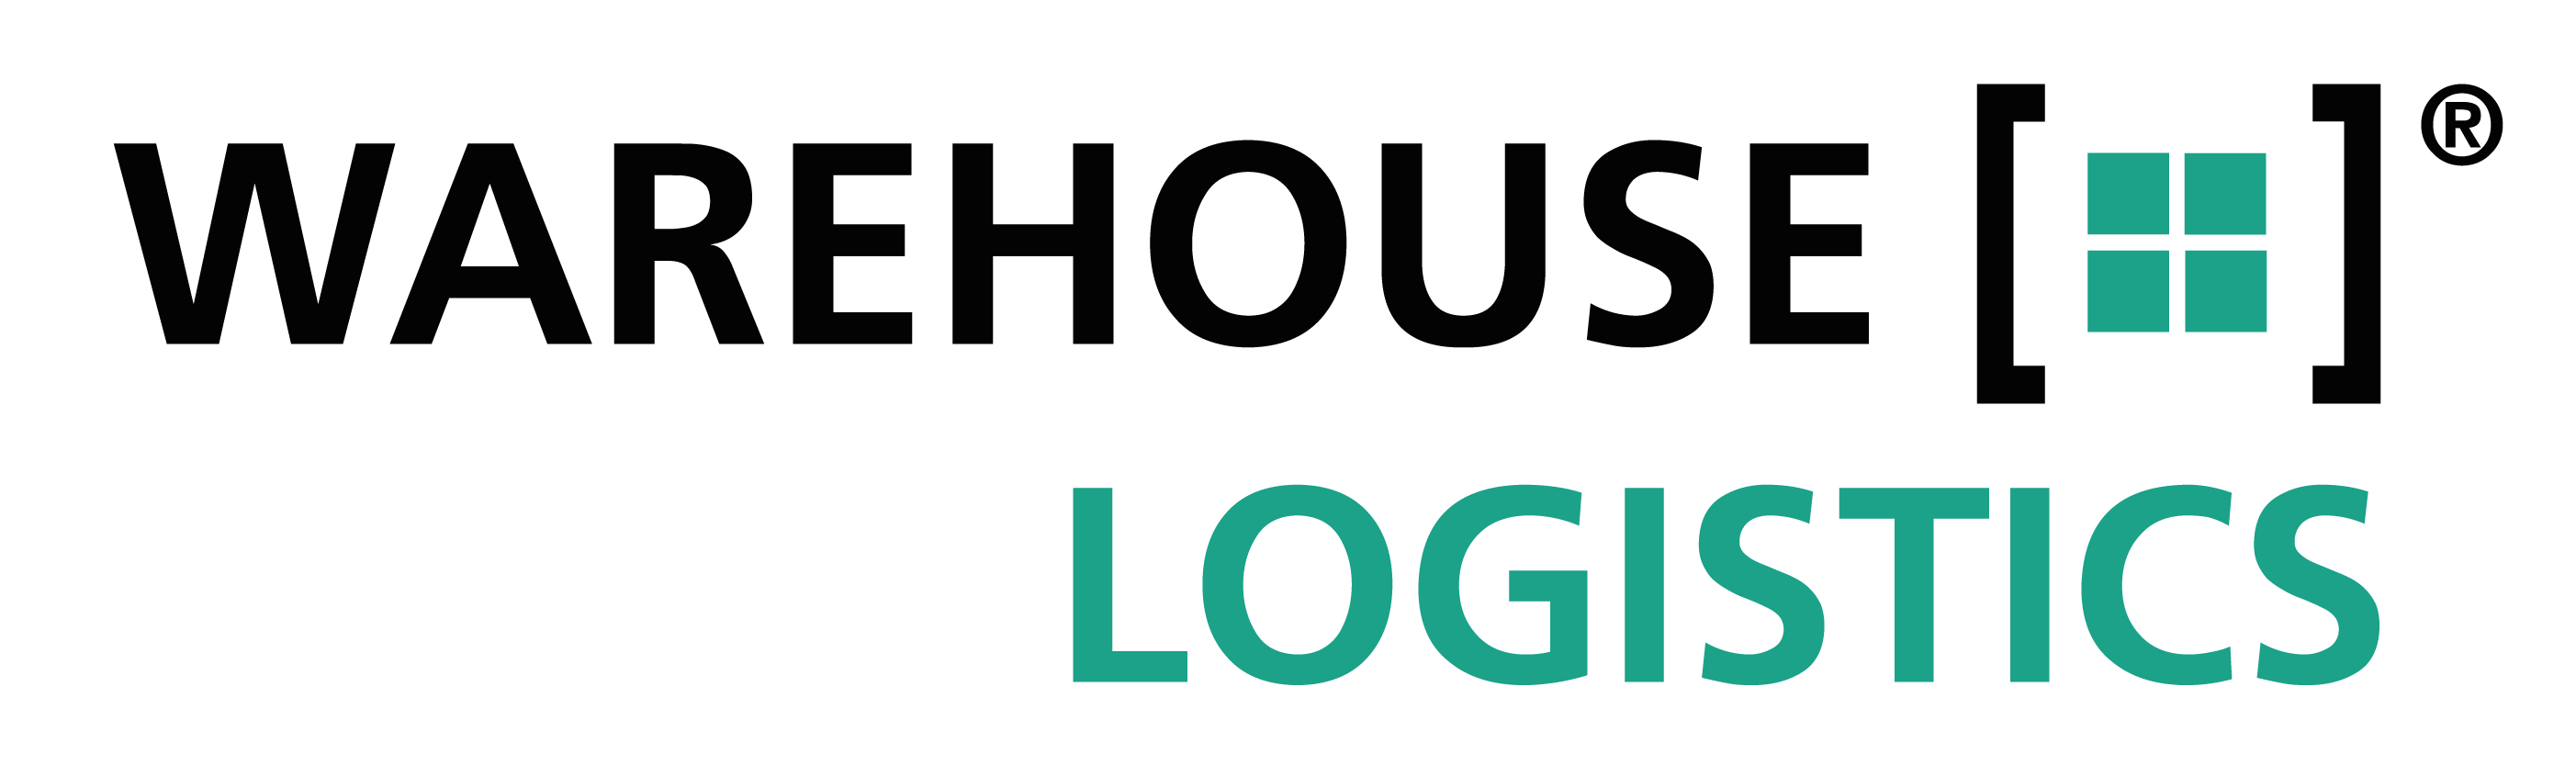 warehouse-logistics: Advisory Committee warehouse logistics: What Is the Advisory Committee and What Functions Does It Fulfill? | warehouse logistics